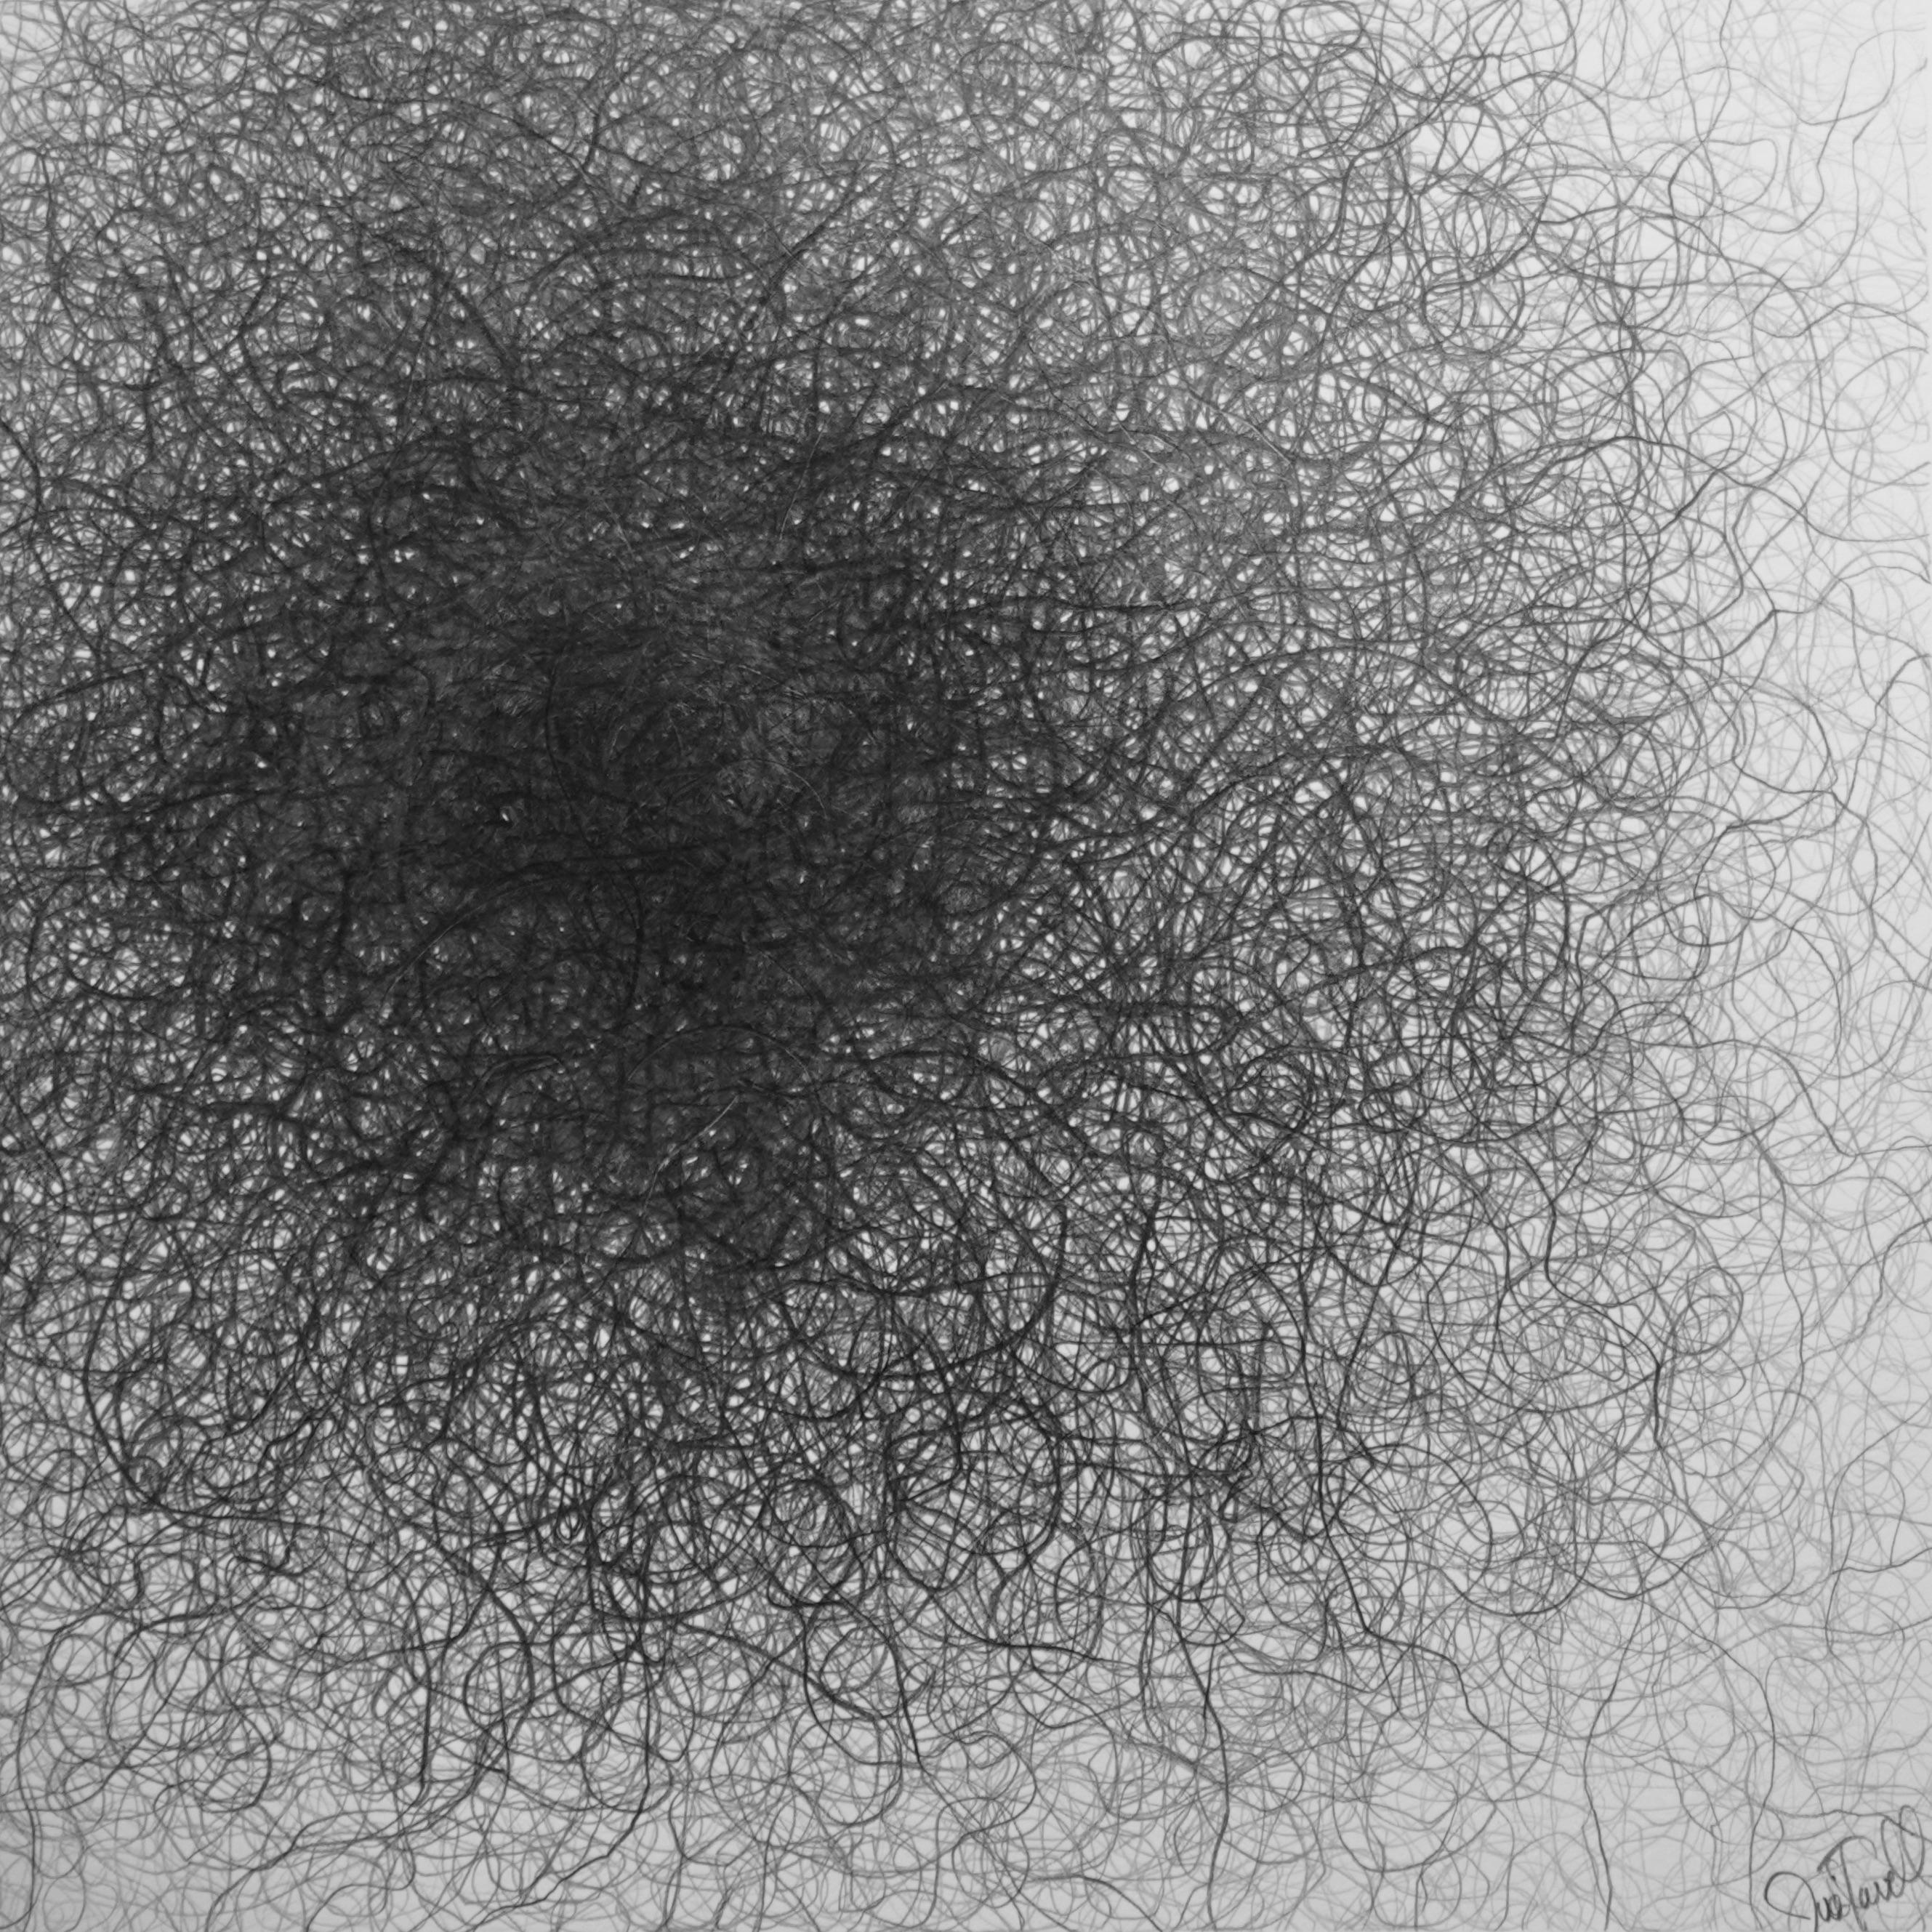 Judi Tavill Abstract Drawing - Minimal, black and white, graphite drawing: 'Expanse'